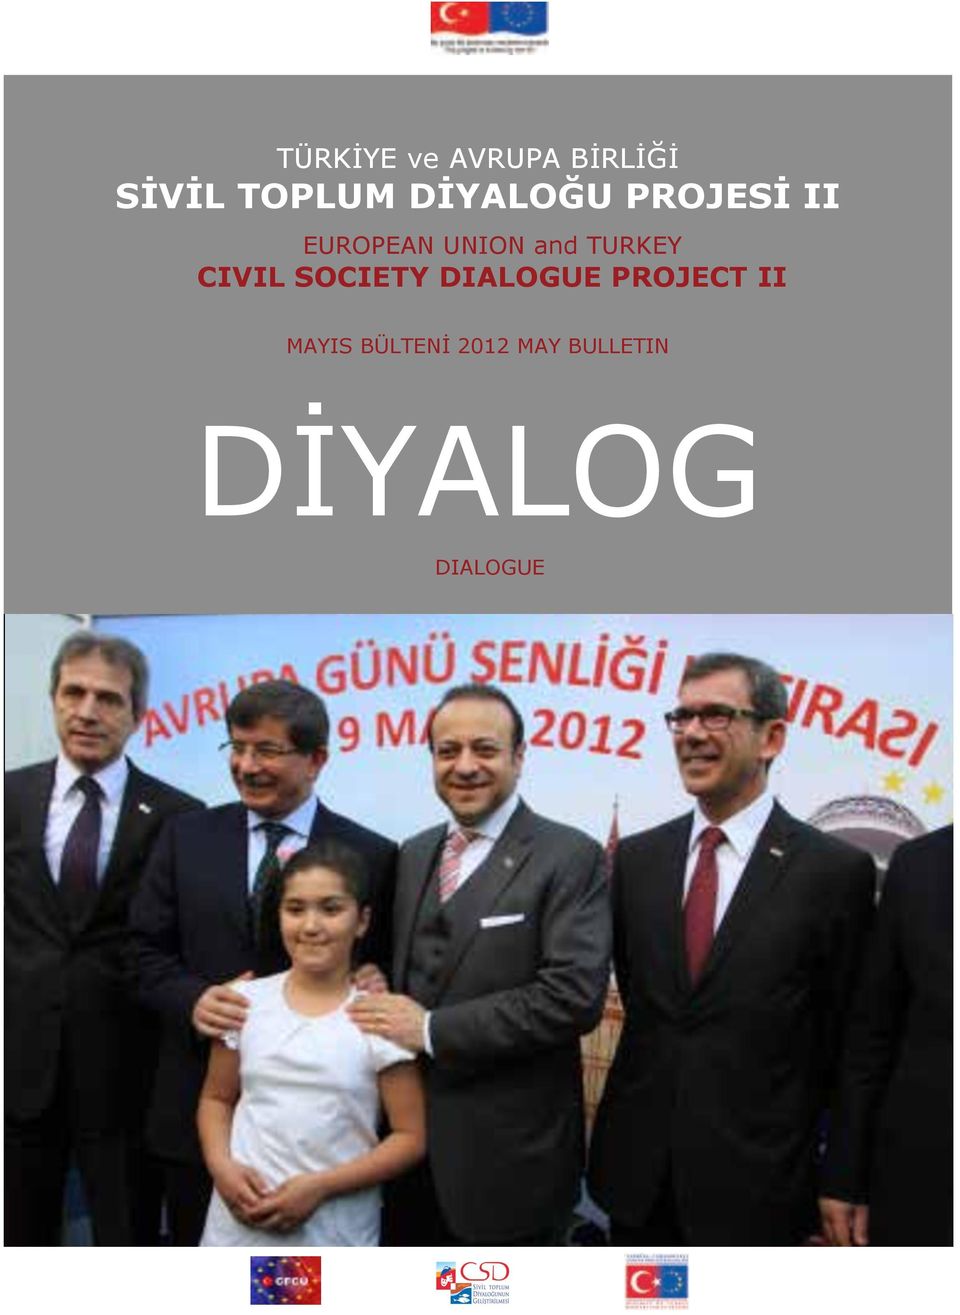 TURKEY CIVIL SOCIETY DIALOGUE PROJECT II